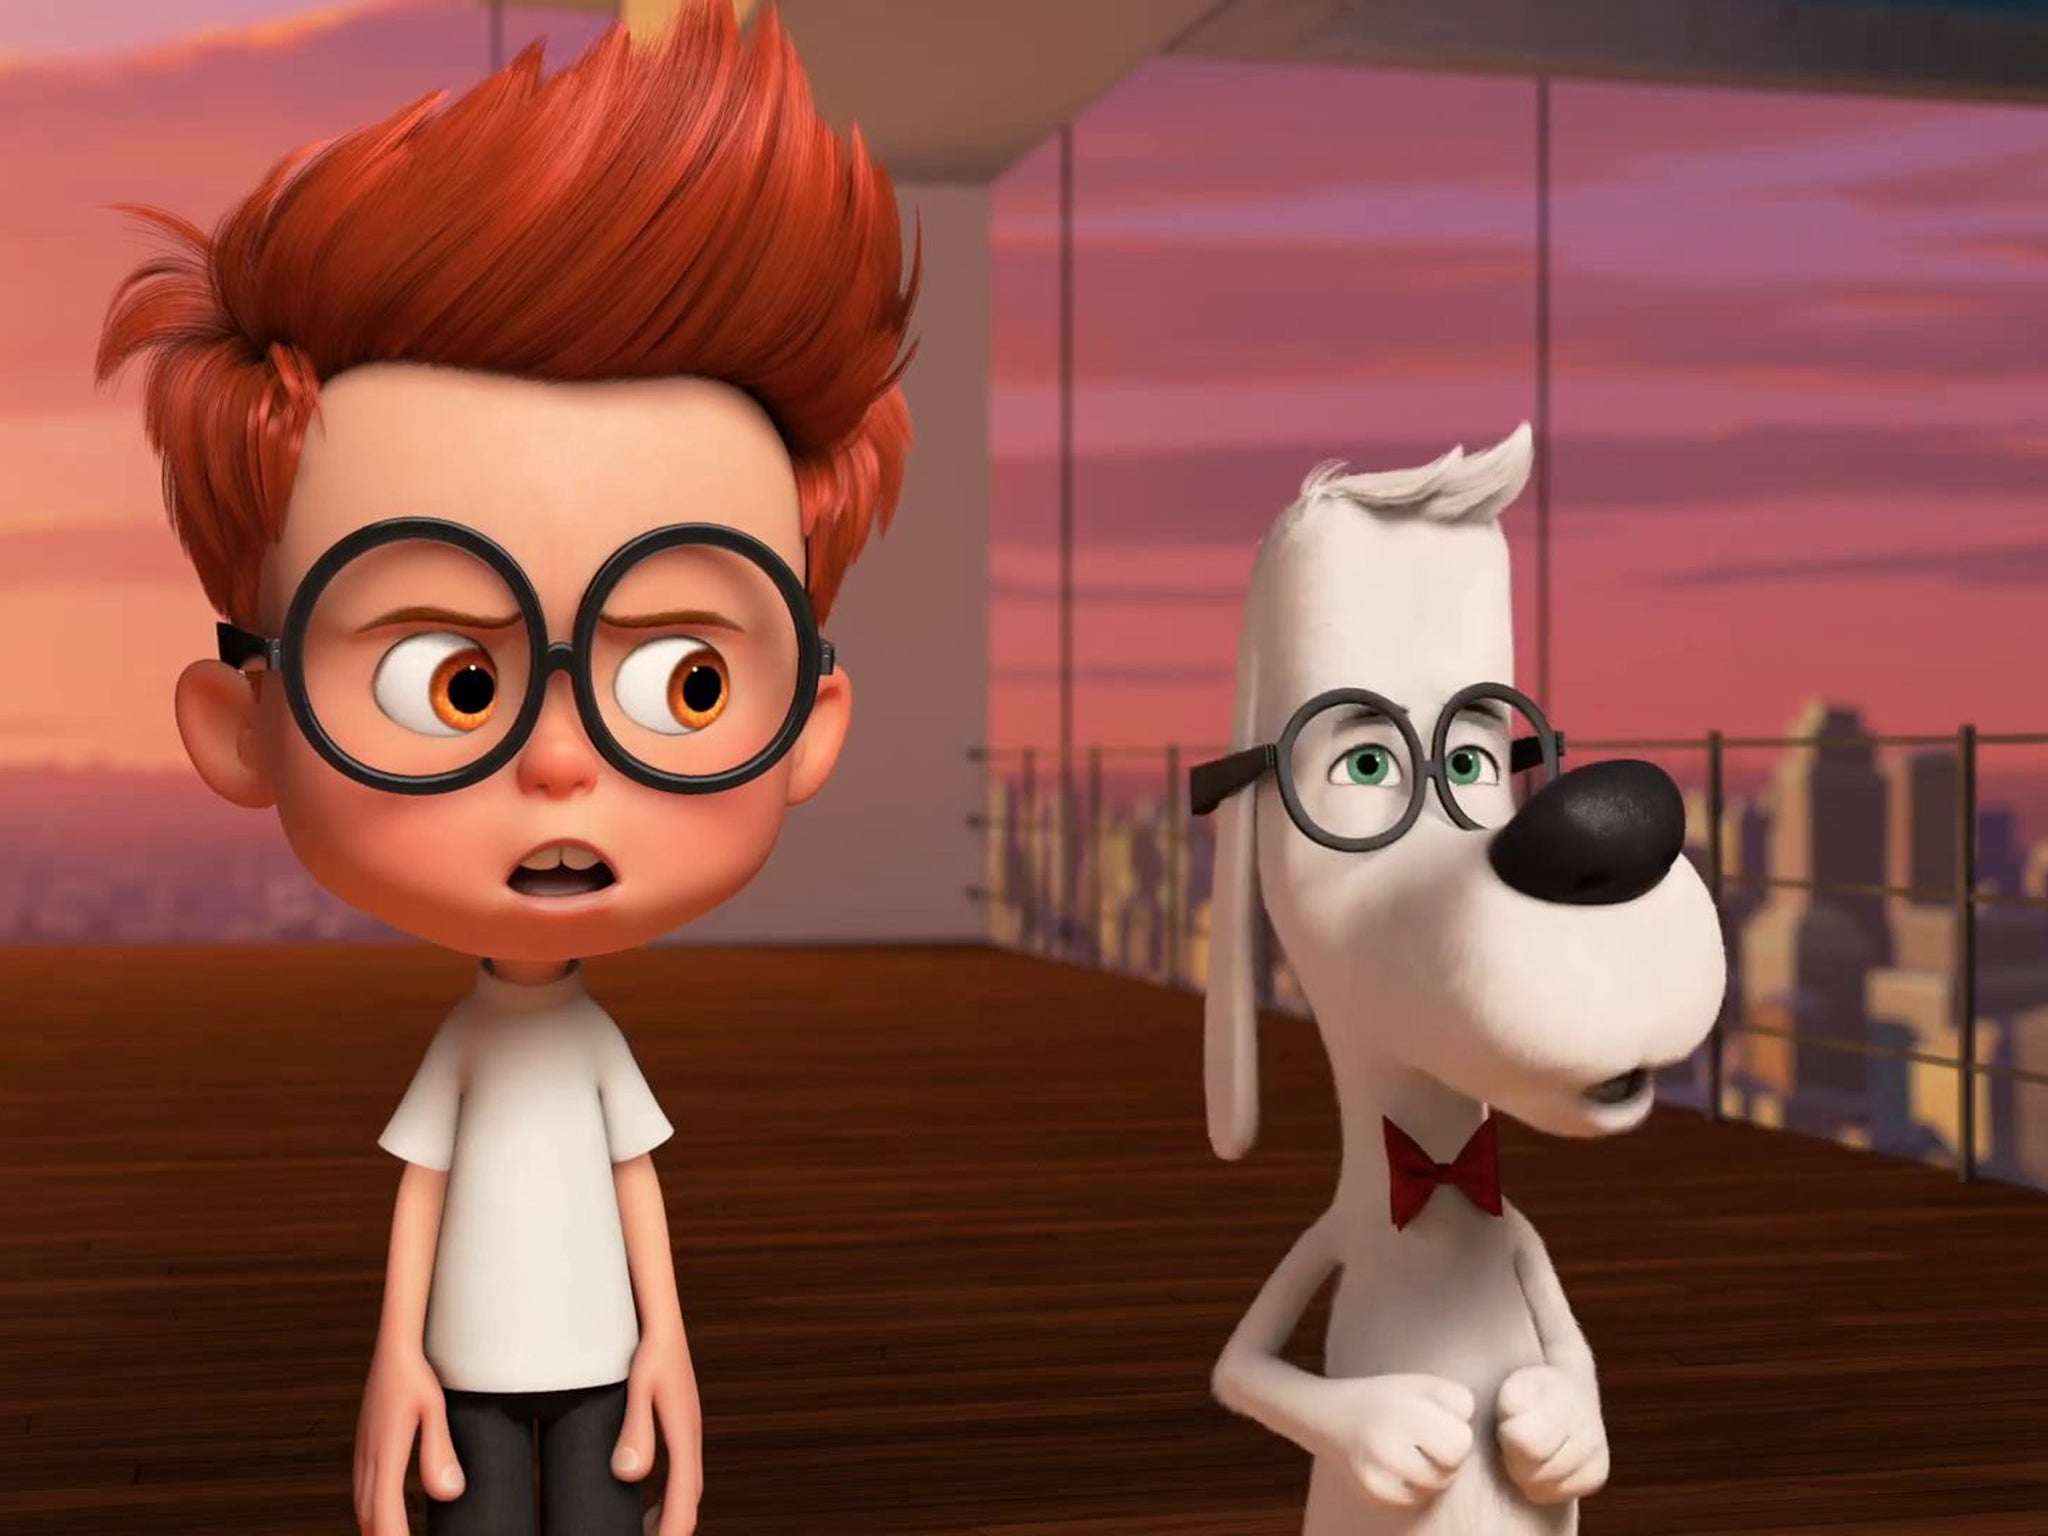 ‘Mr Peabody & Sherman’ is leaving Netflix in February